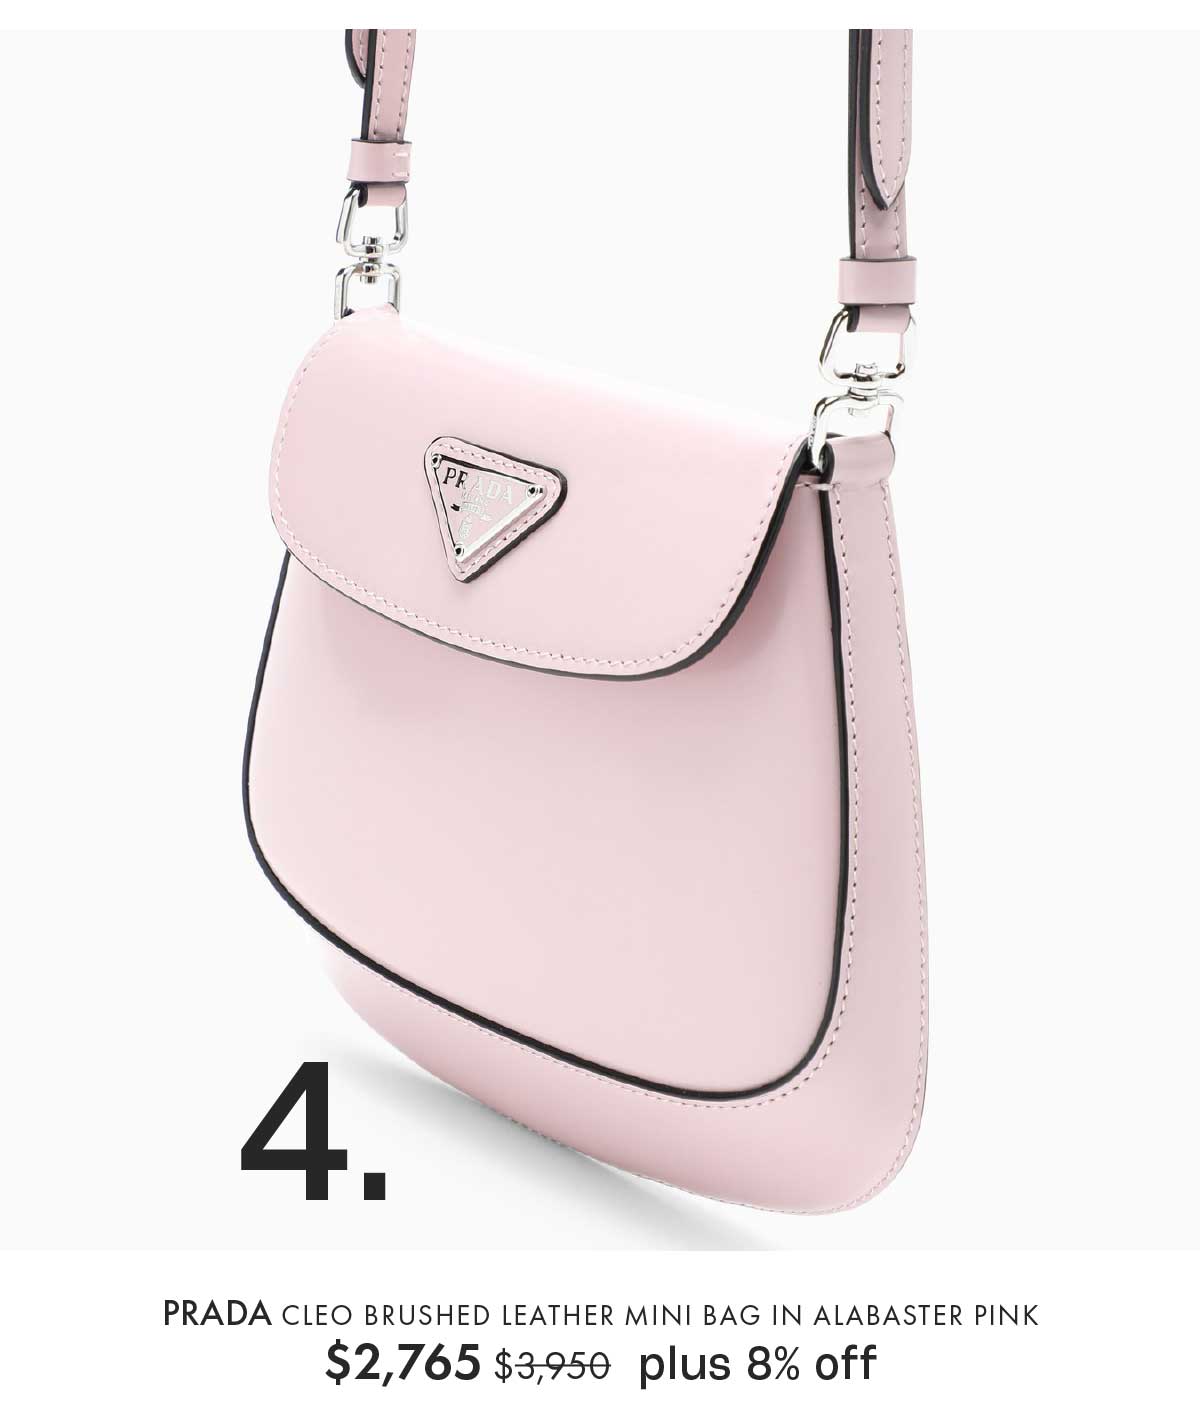 Prada Cleo Brushed Leather Mini Bag In Alabaster Pink